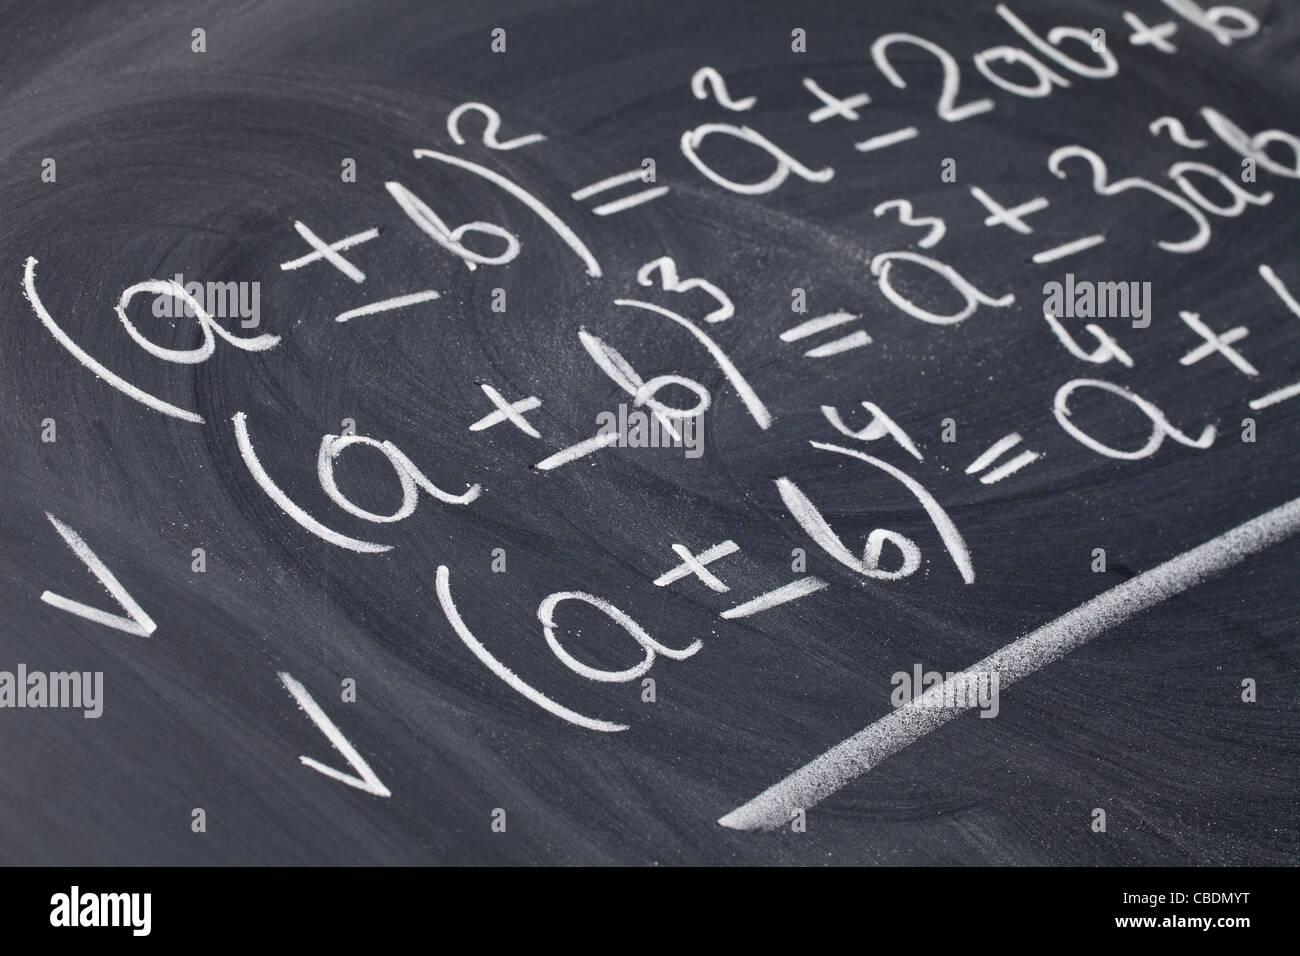 mathematical education concept - algebra equations handwritten with white chalk on blackboard Stock Photo